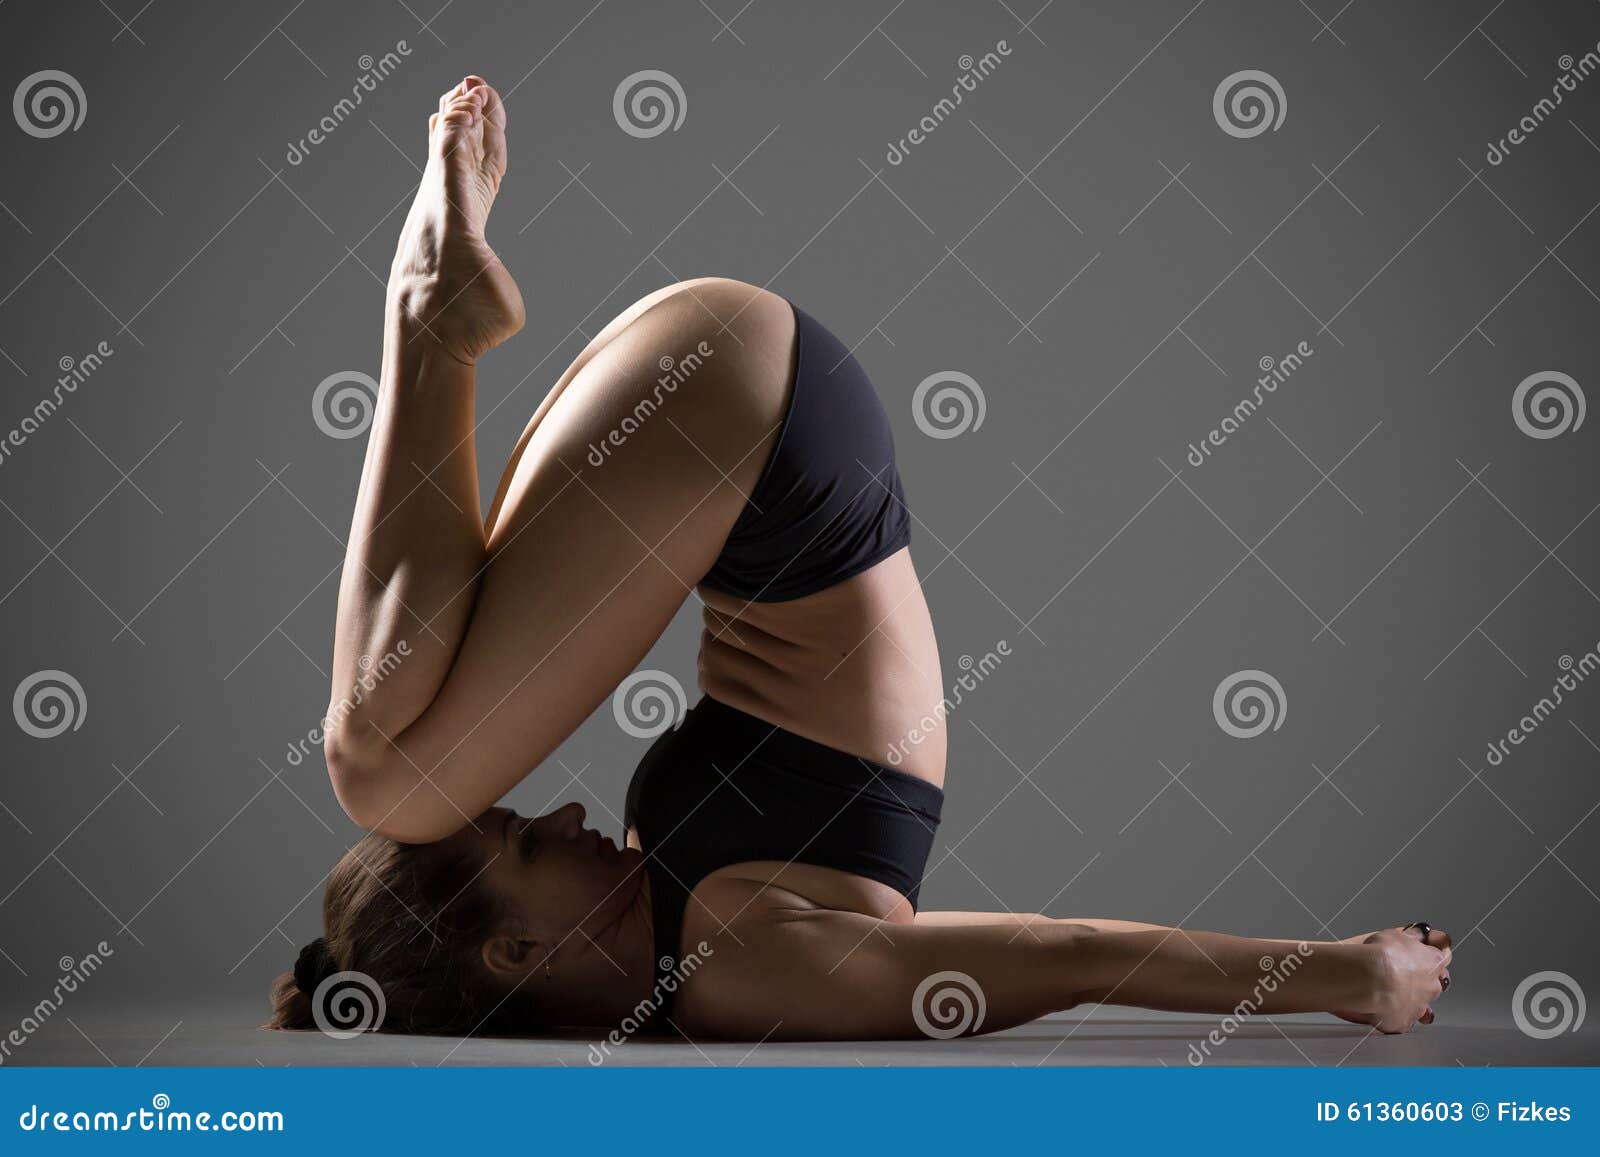 Yoga Poses: Bow Pose (Dhanurasana) | Workout Trends